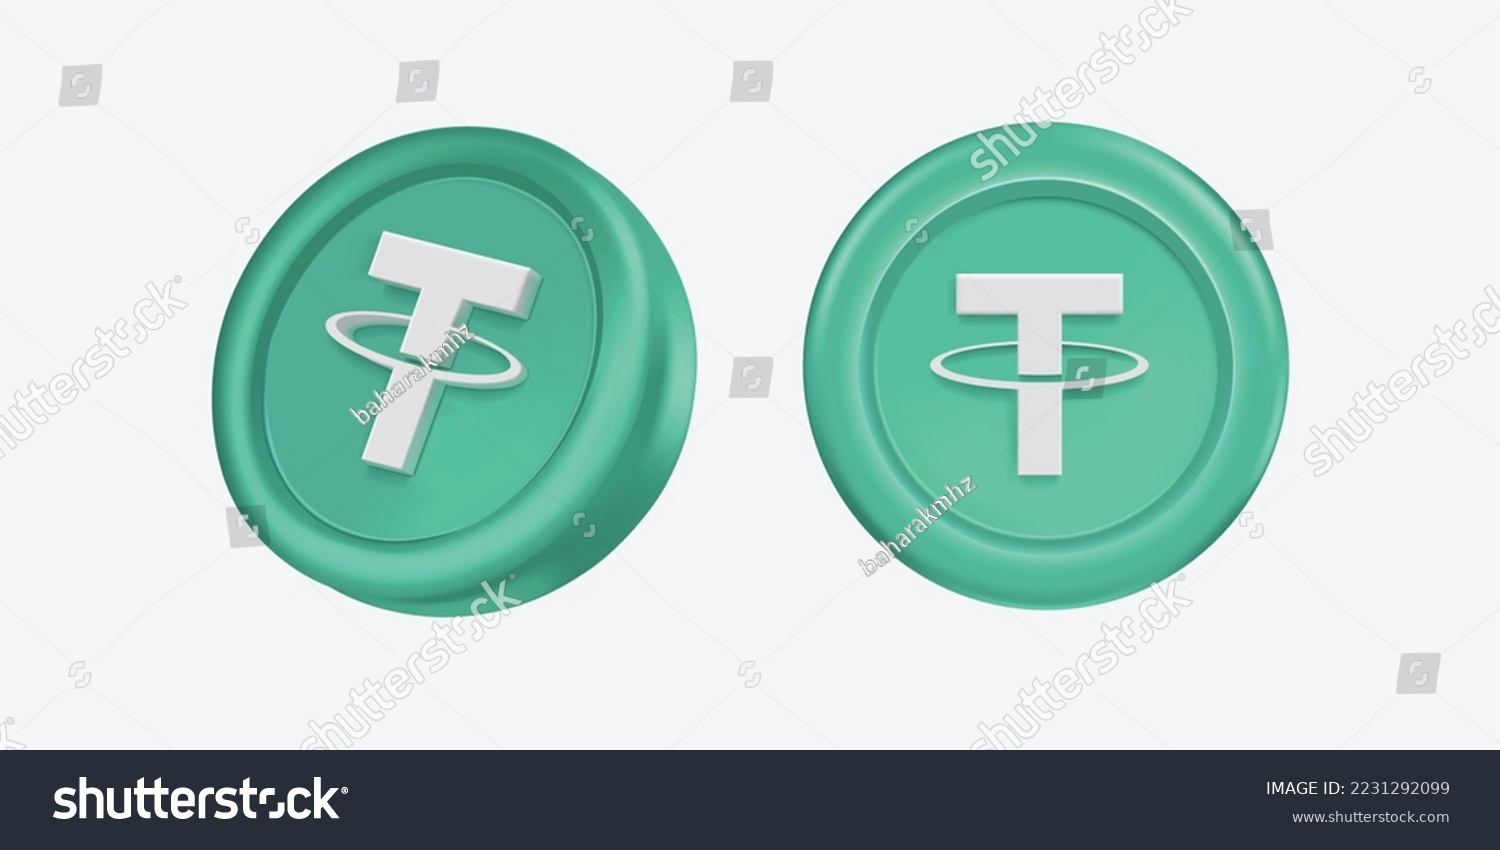 SVG of 3d Tether Cryptocurrency Coin (Usdt) on white background. Vector illustration svg